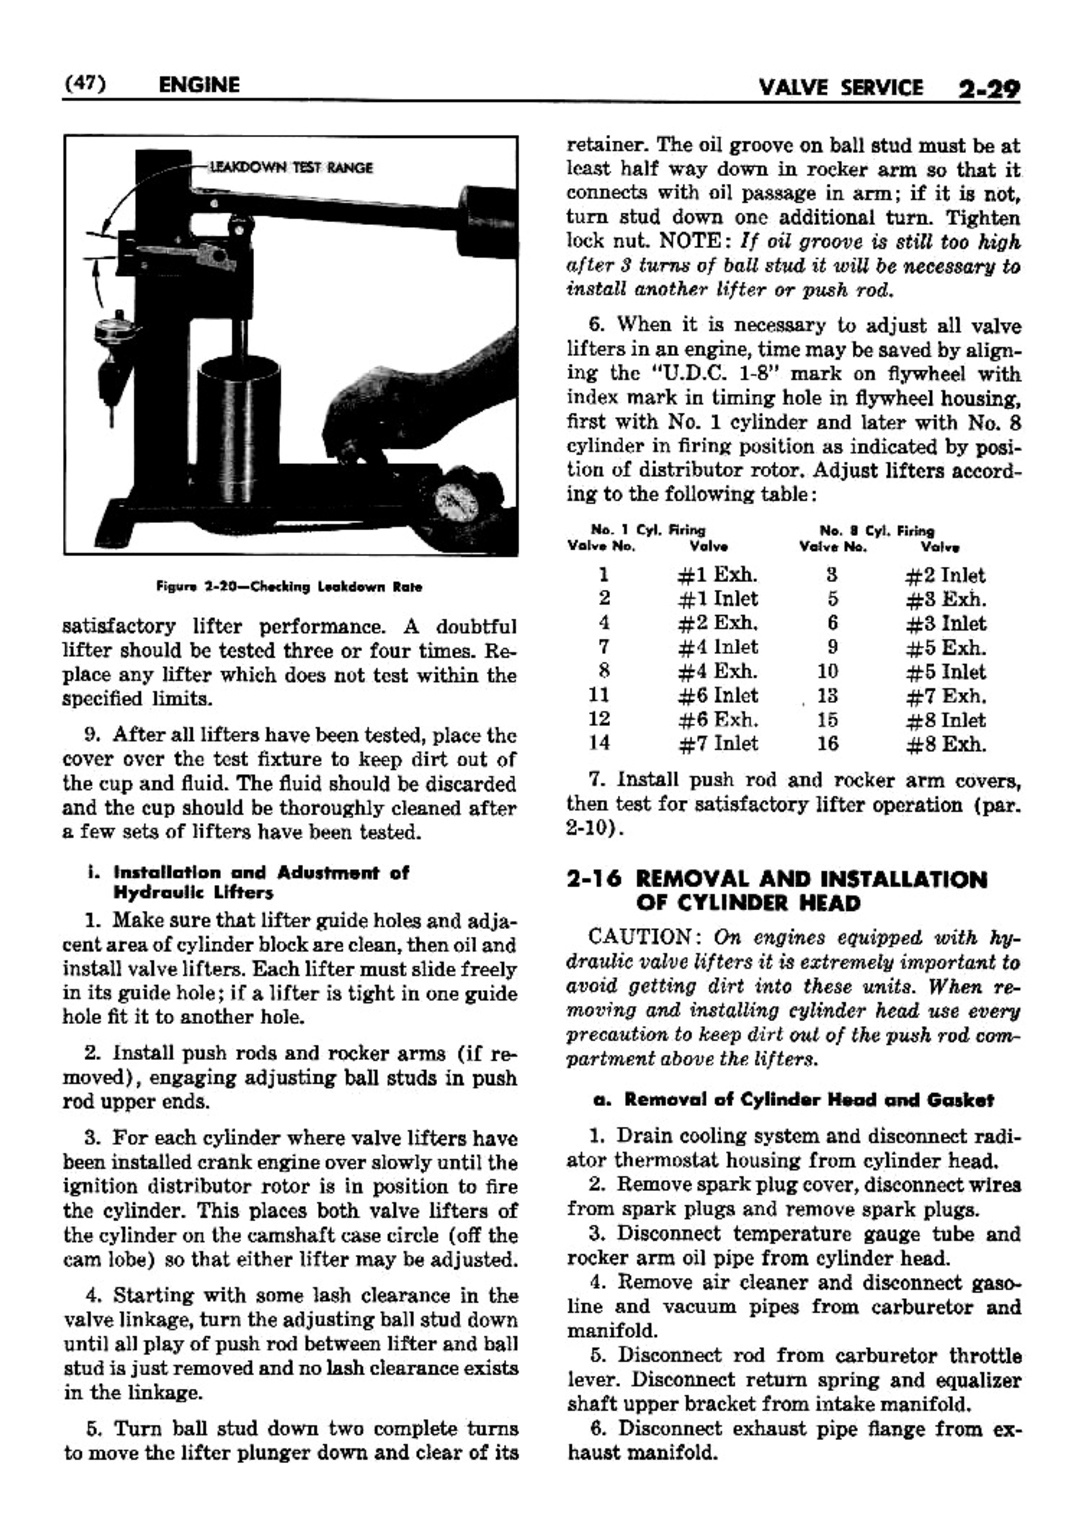 n_03 1952 Buick Shop Manual - Engine-029-029.jpg